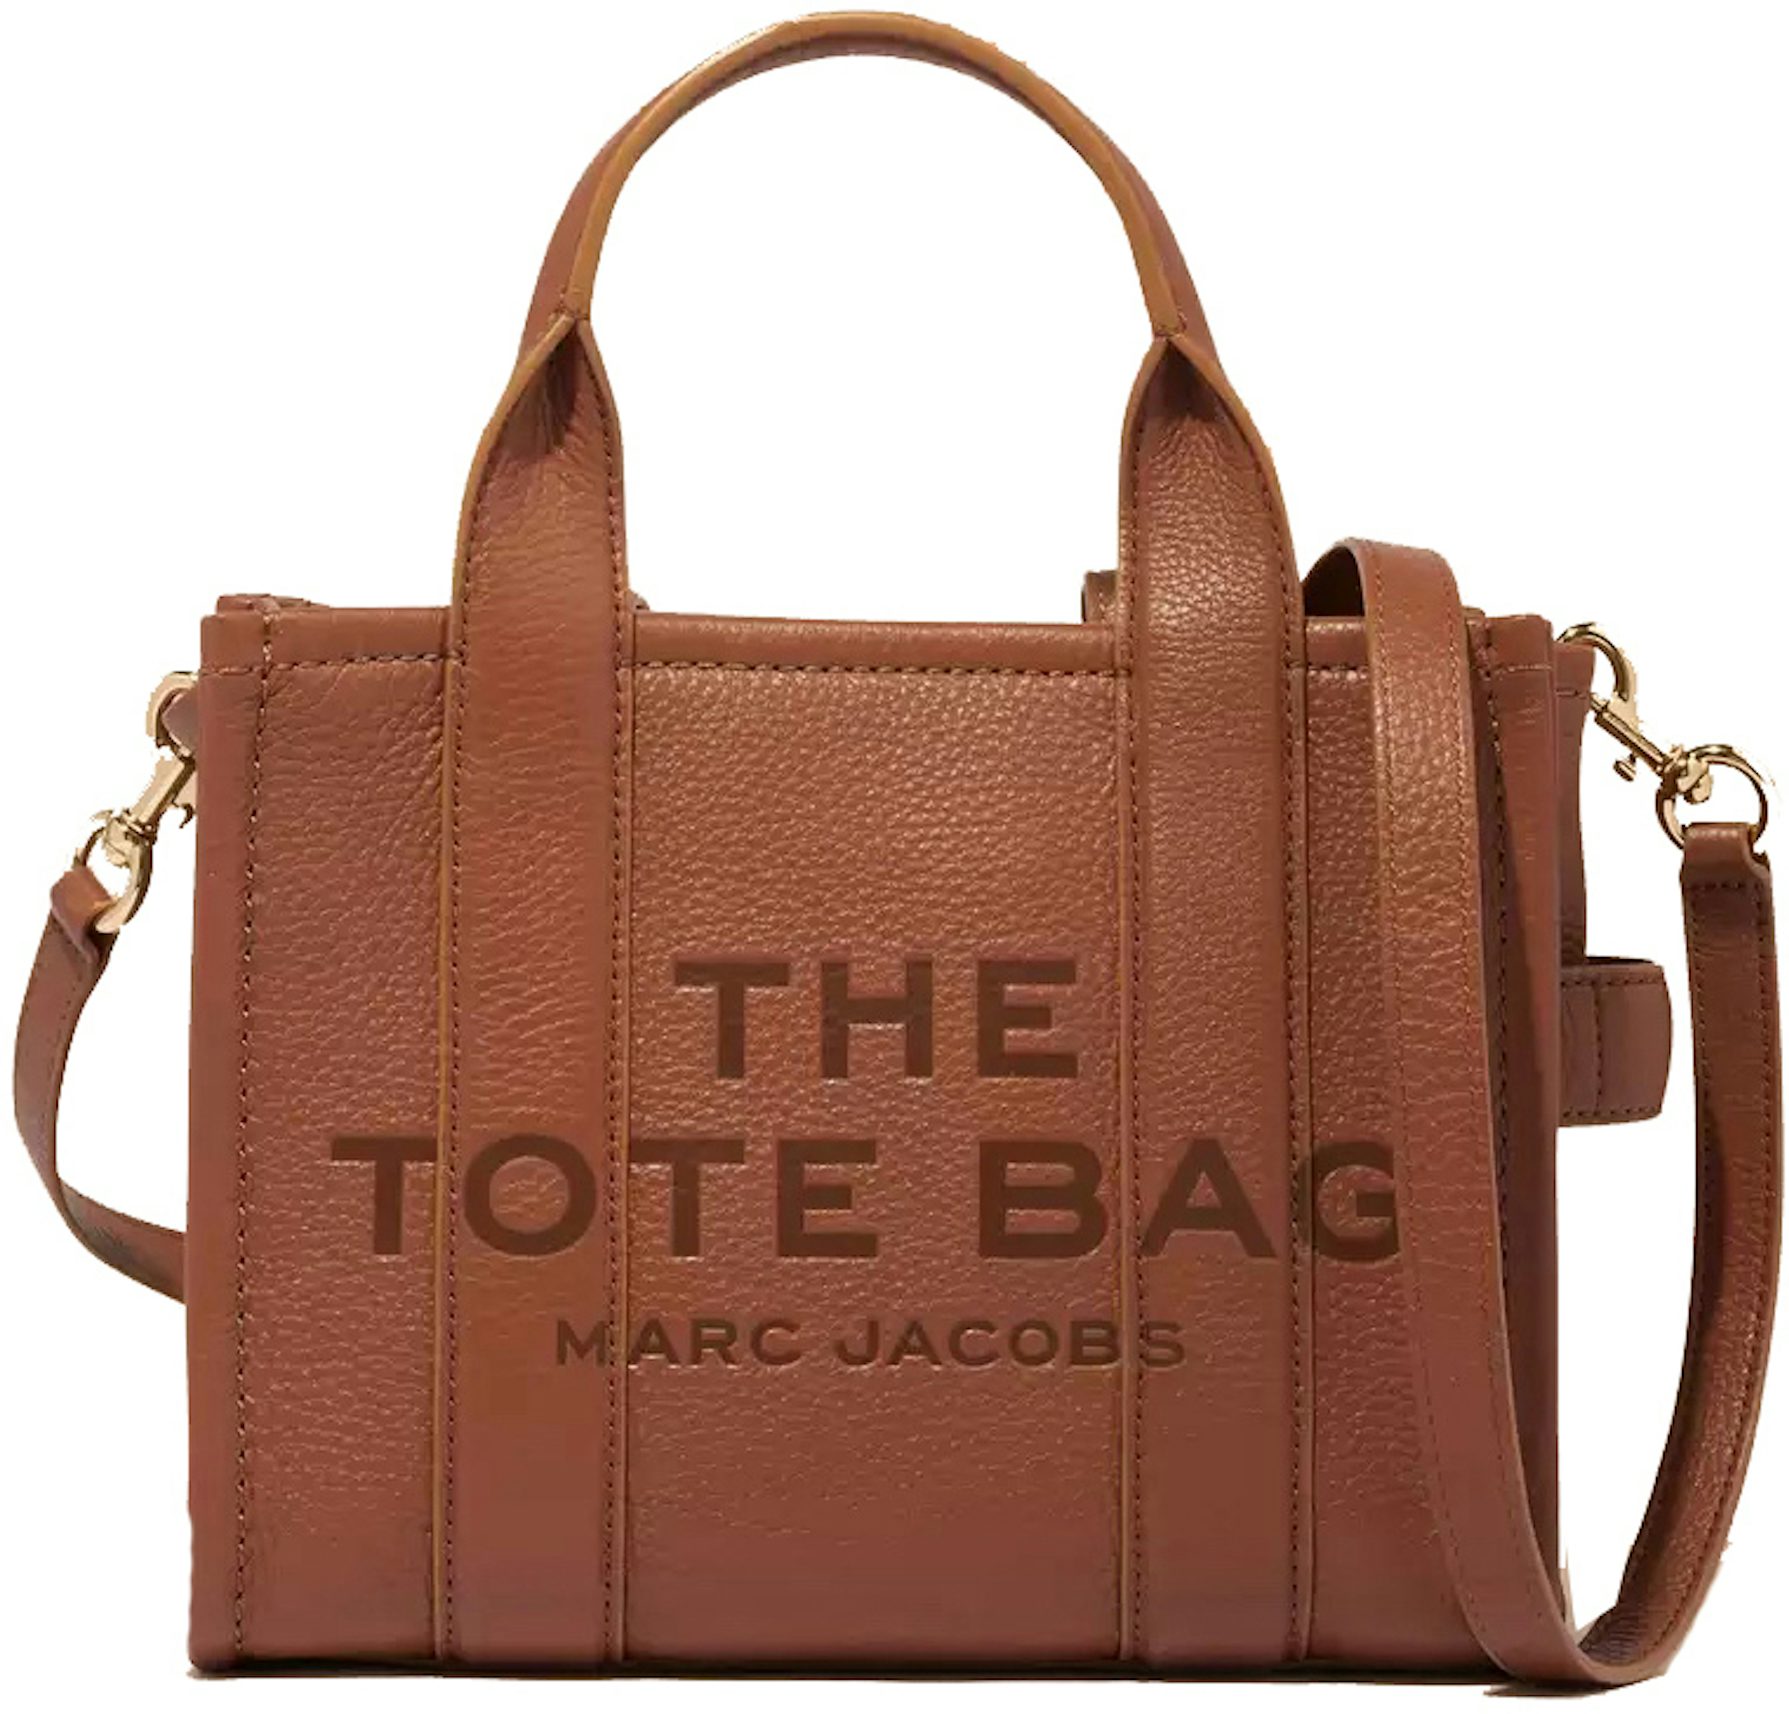 Classic Q Boston Bag - Marc by Marc Jacobs